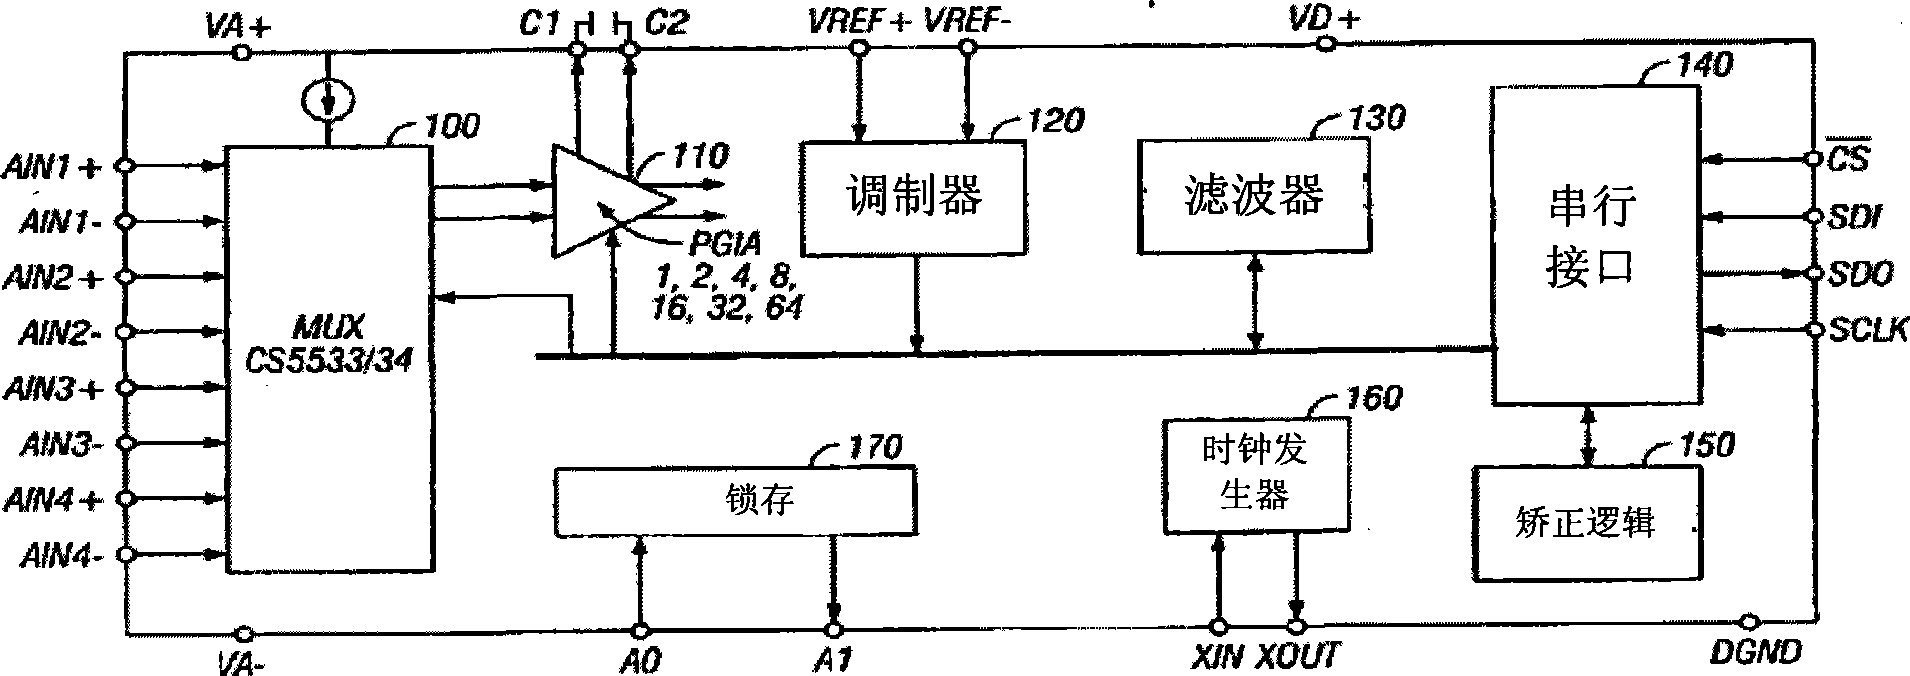 Signal conditioning circuit and dual sampling-hold circuit applying the conditioning method